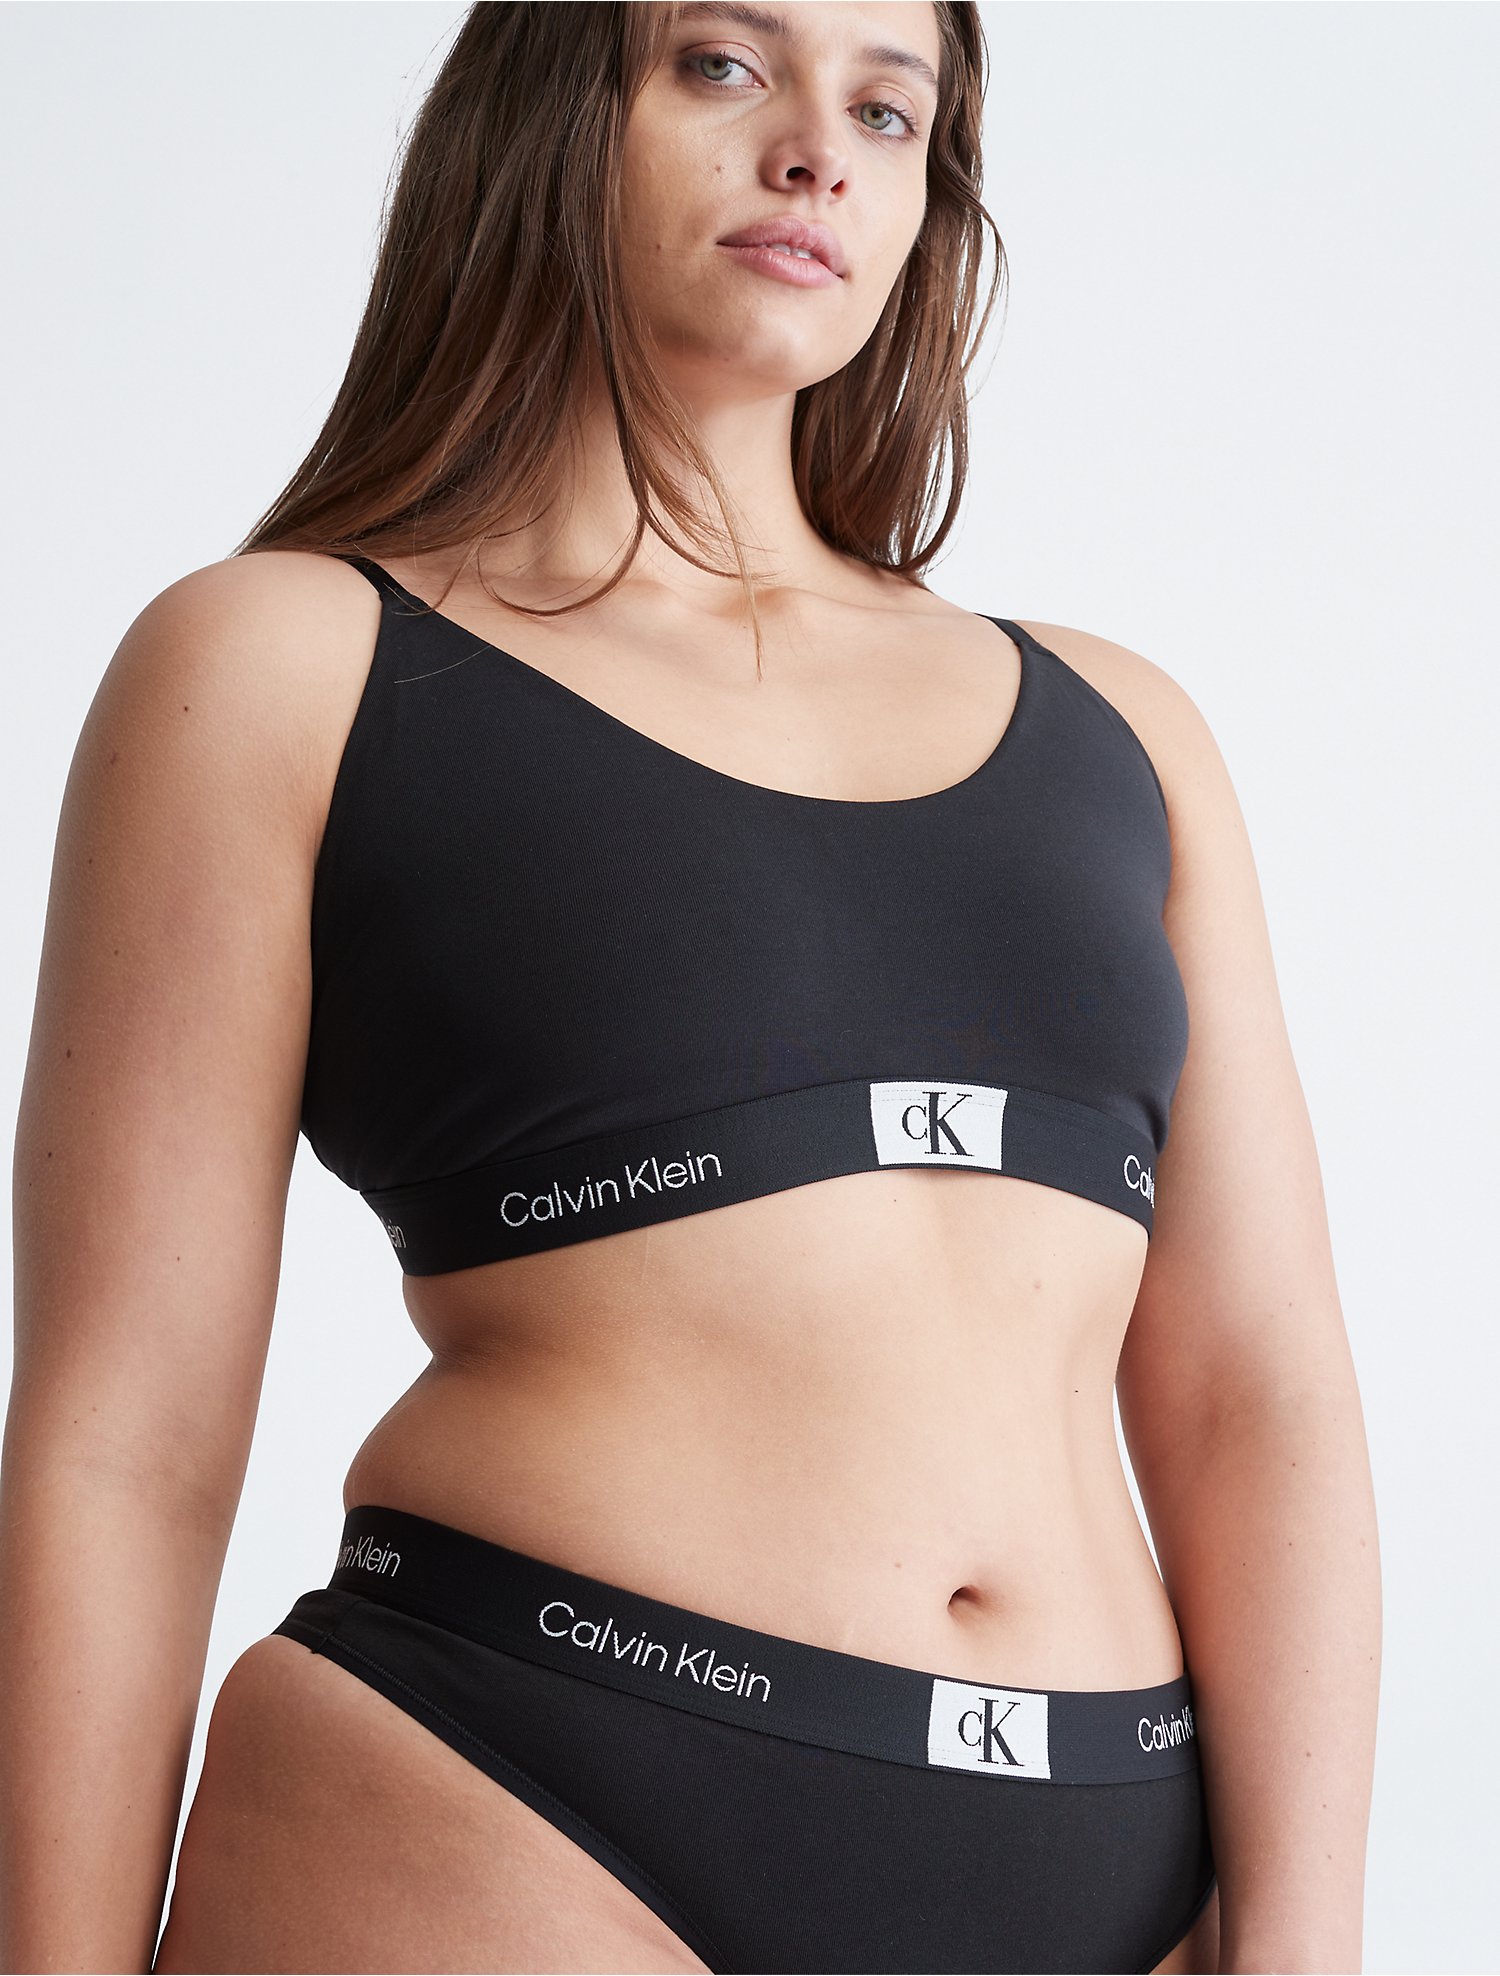 Overweldigend hoofd Veronderstelling Calvin Klein 1996 Plus Size Unlined Bralette | Calvin Klein